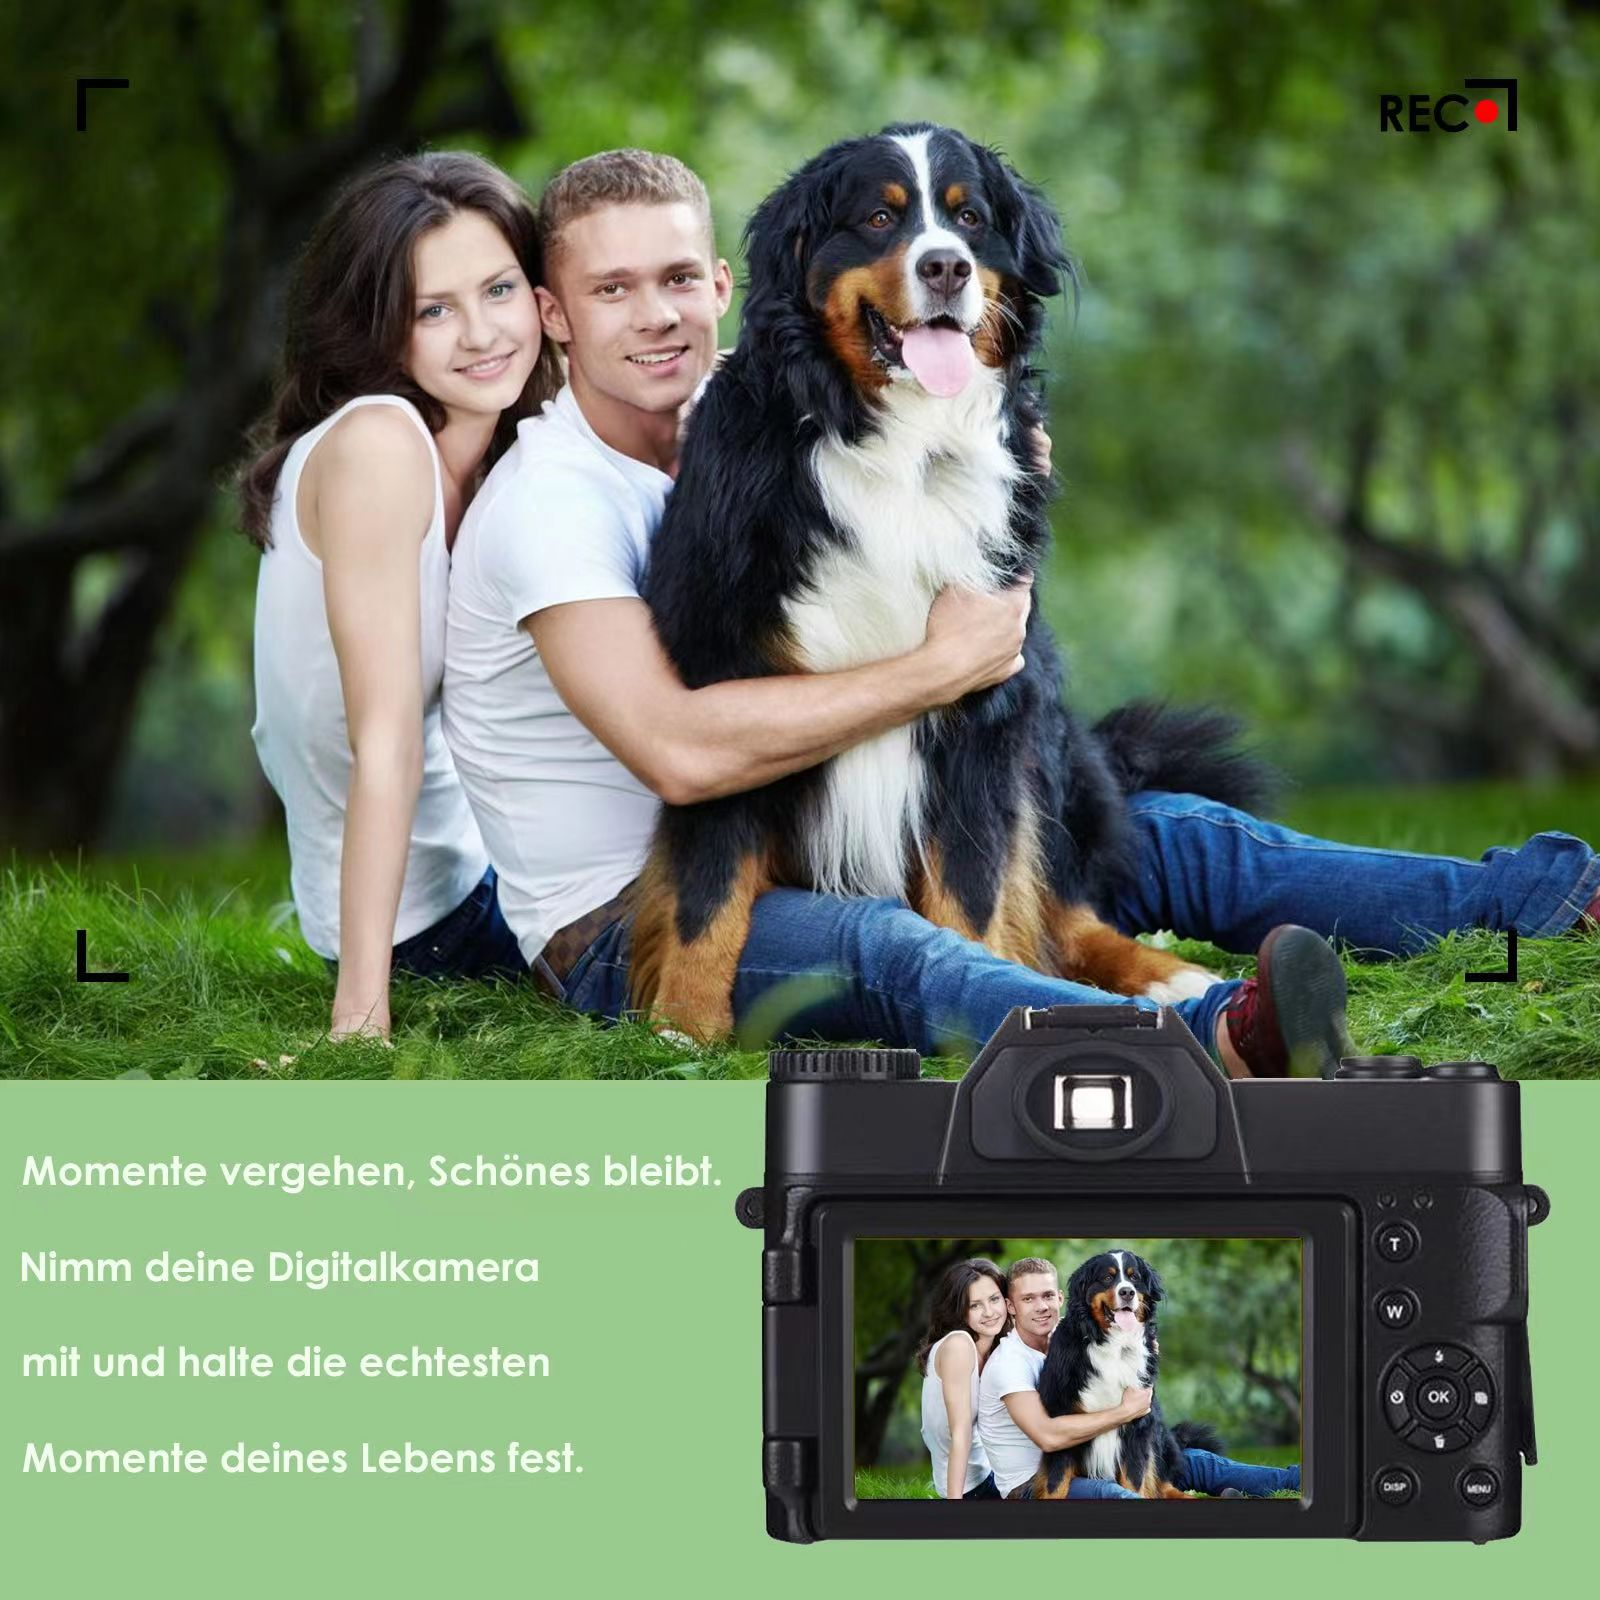 Speicherkarte Mit Flip-Screen Akkuladestation opt. LINGDA Schwarz, duale 64g Ultra HD Kamera Digital Zoom 4K 16x